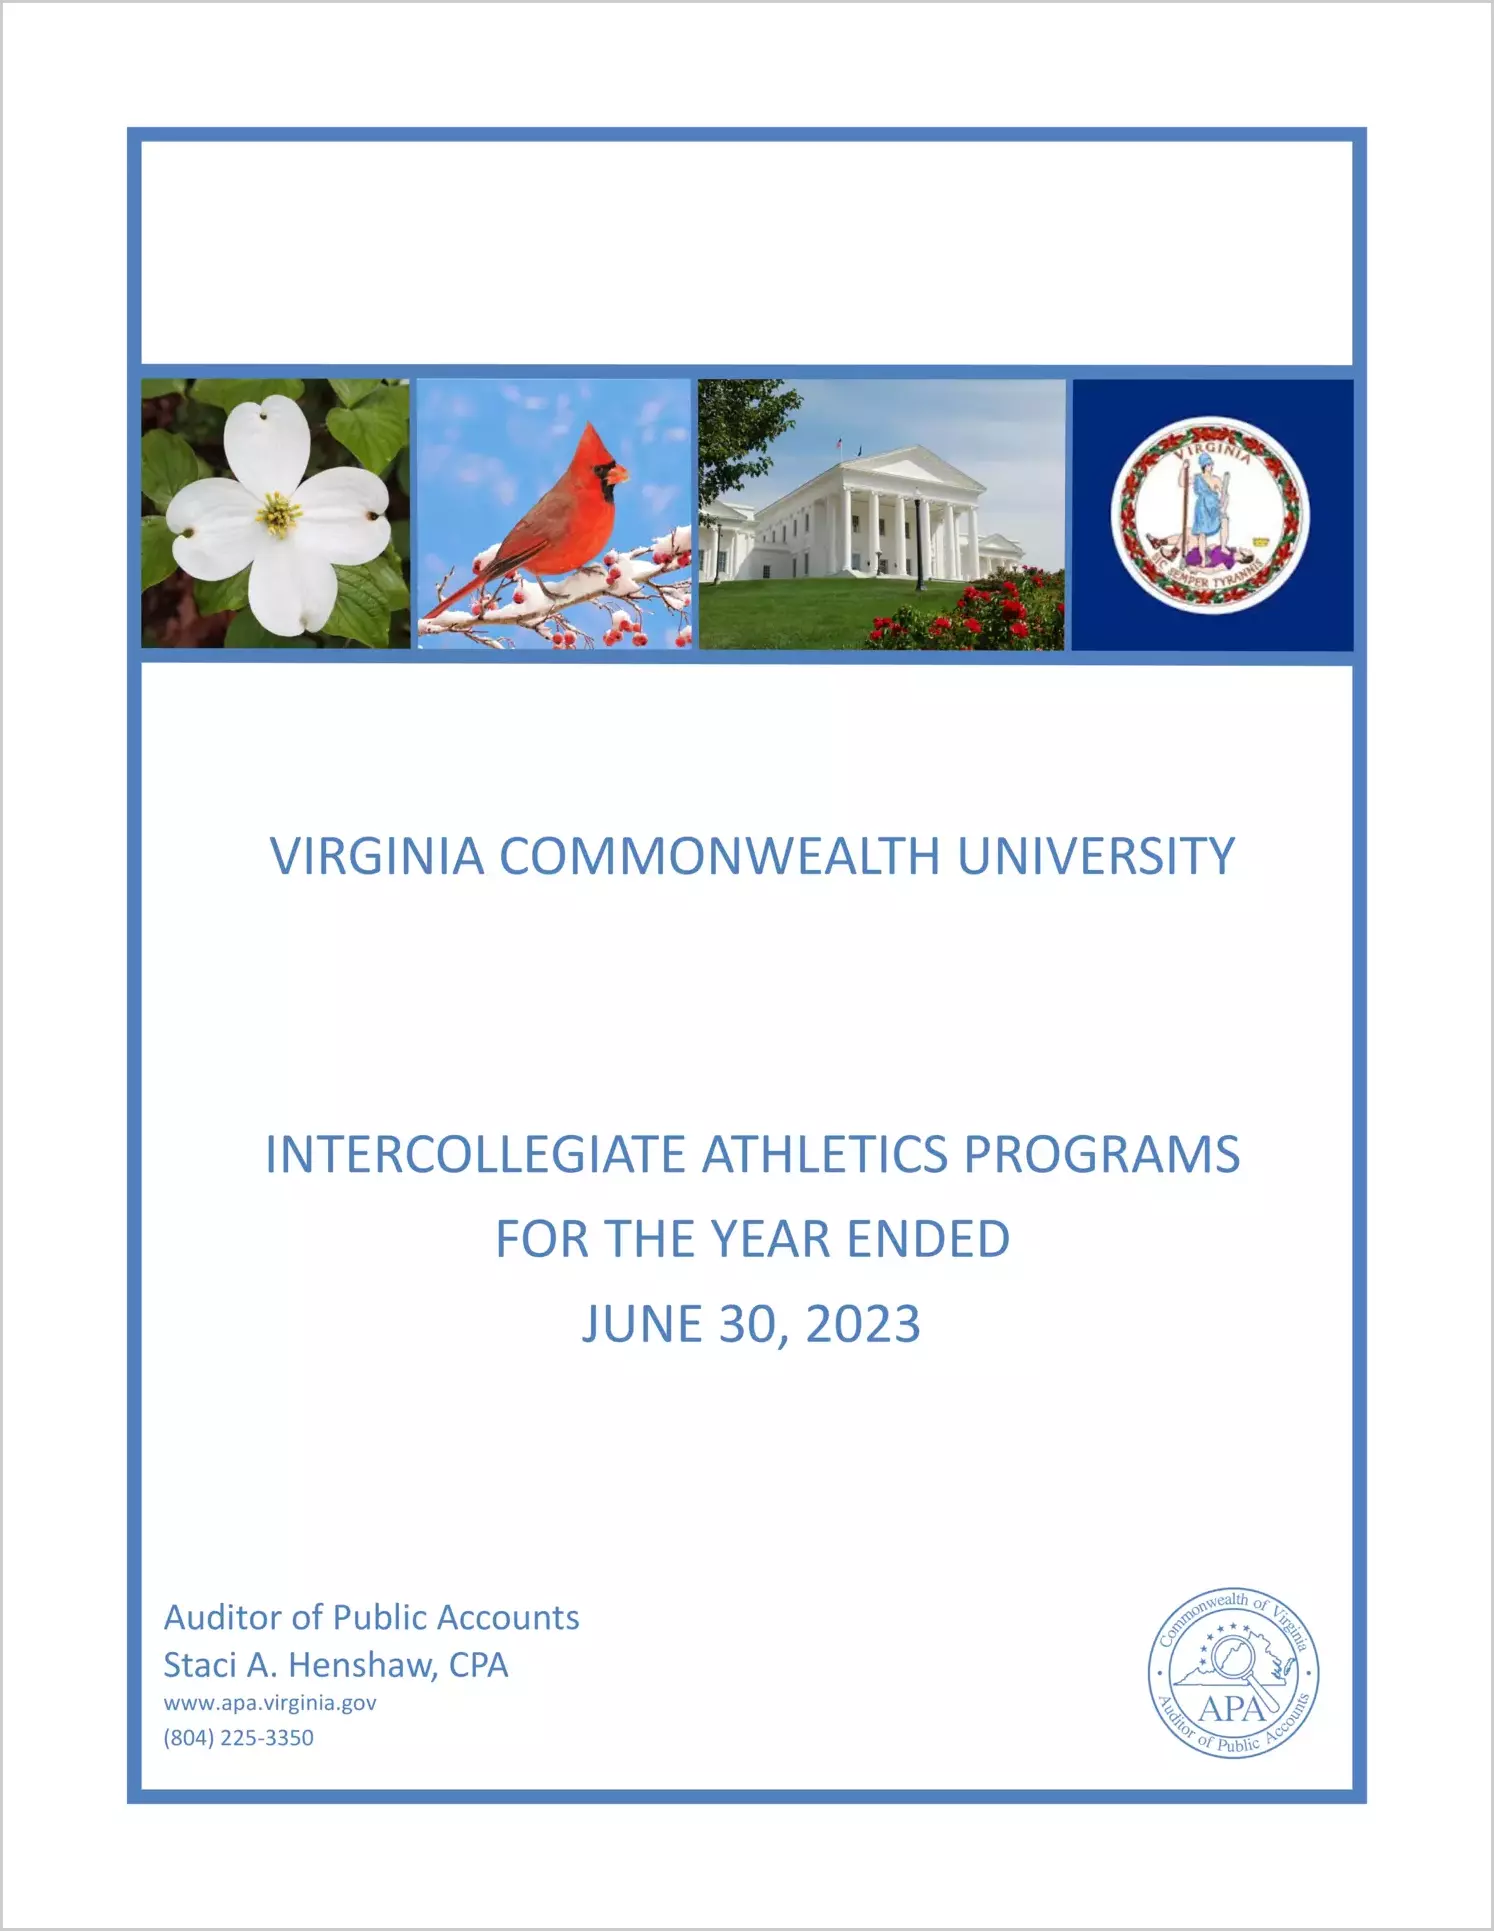 Virginia Commonwealth University Intercollegiate Athletics Programs for the year ended June 30, 2023